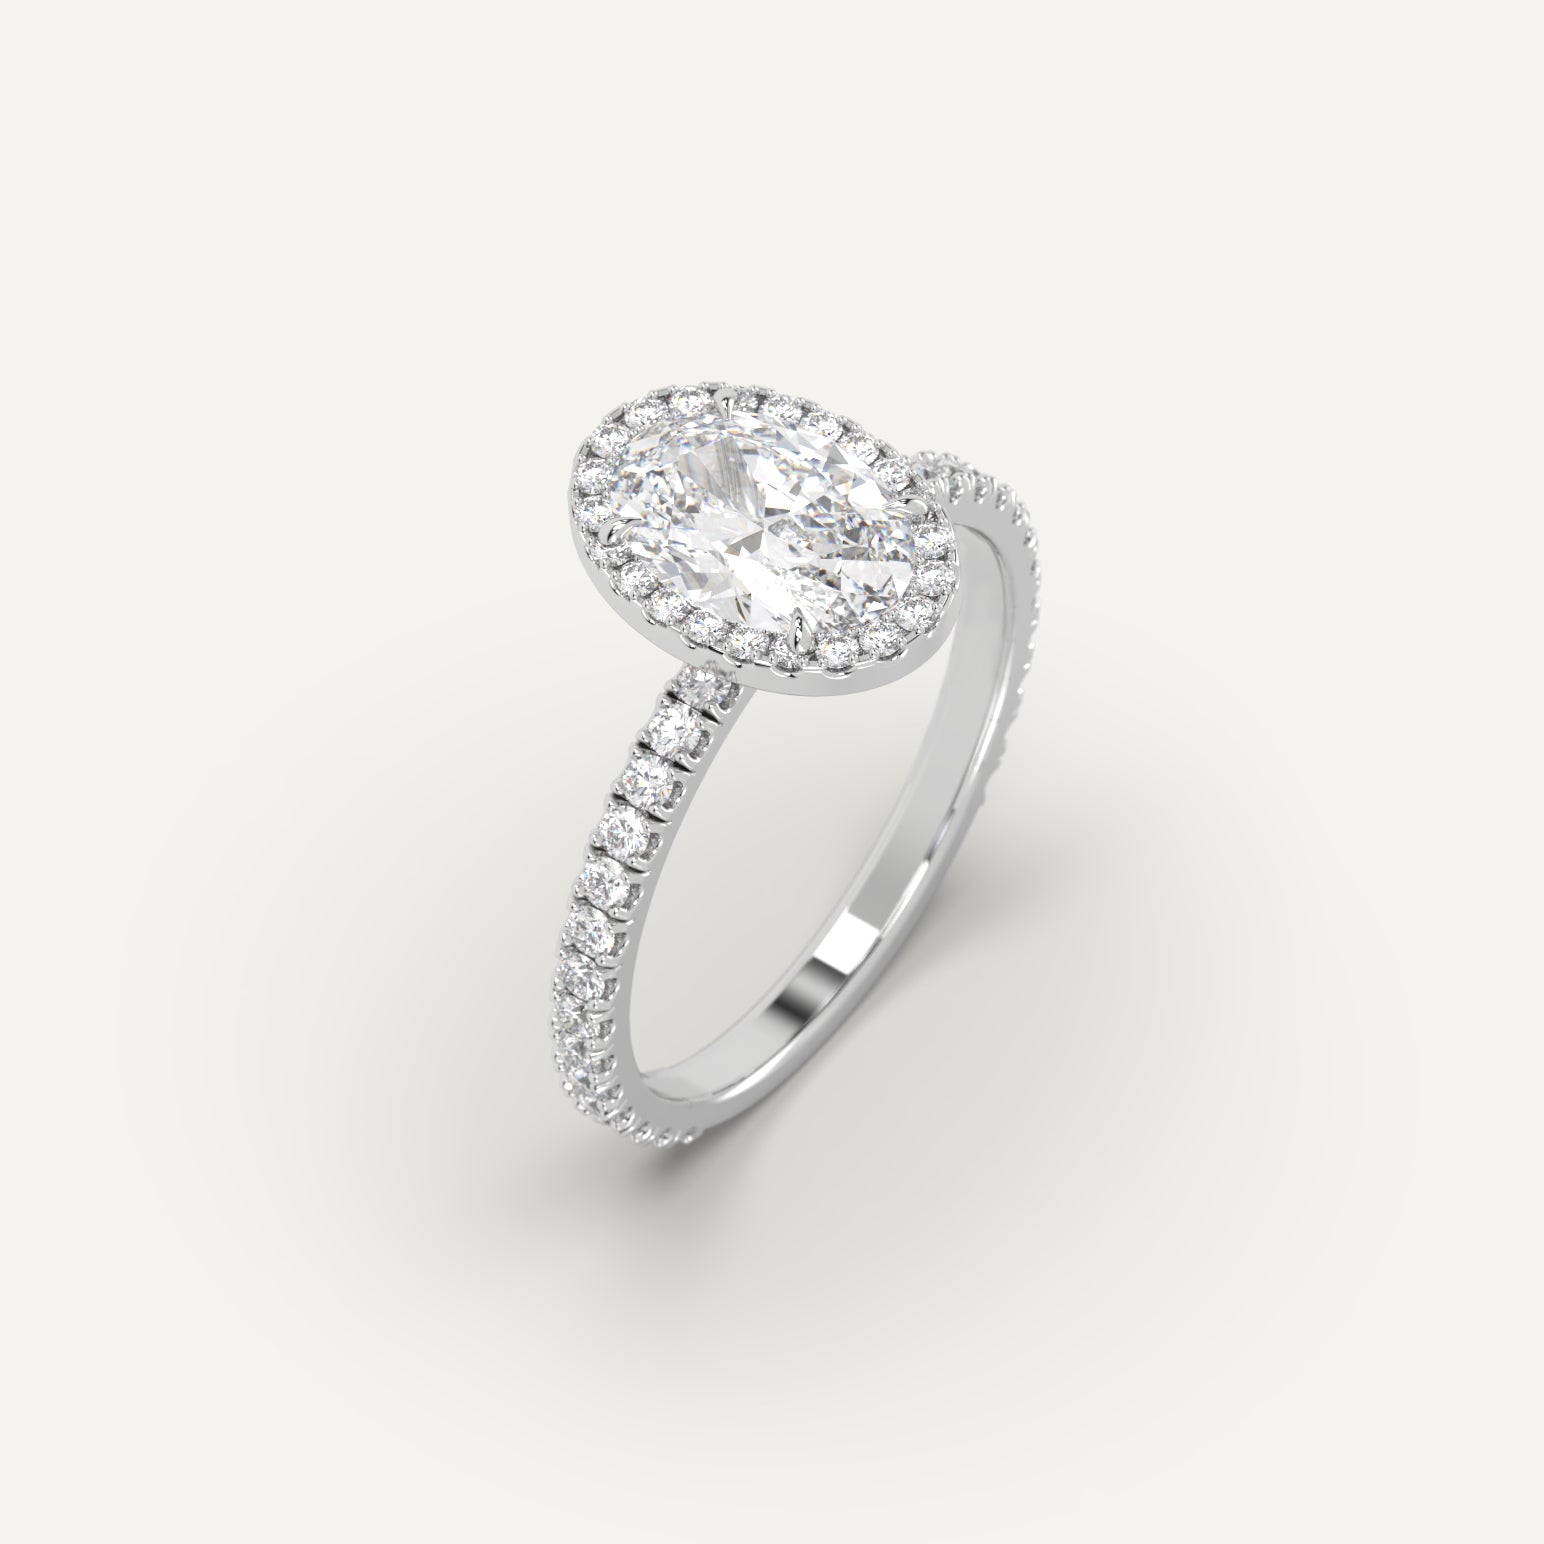 1 carat Oval Cut Engagement Ring in 950 Platinum